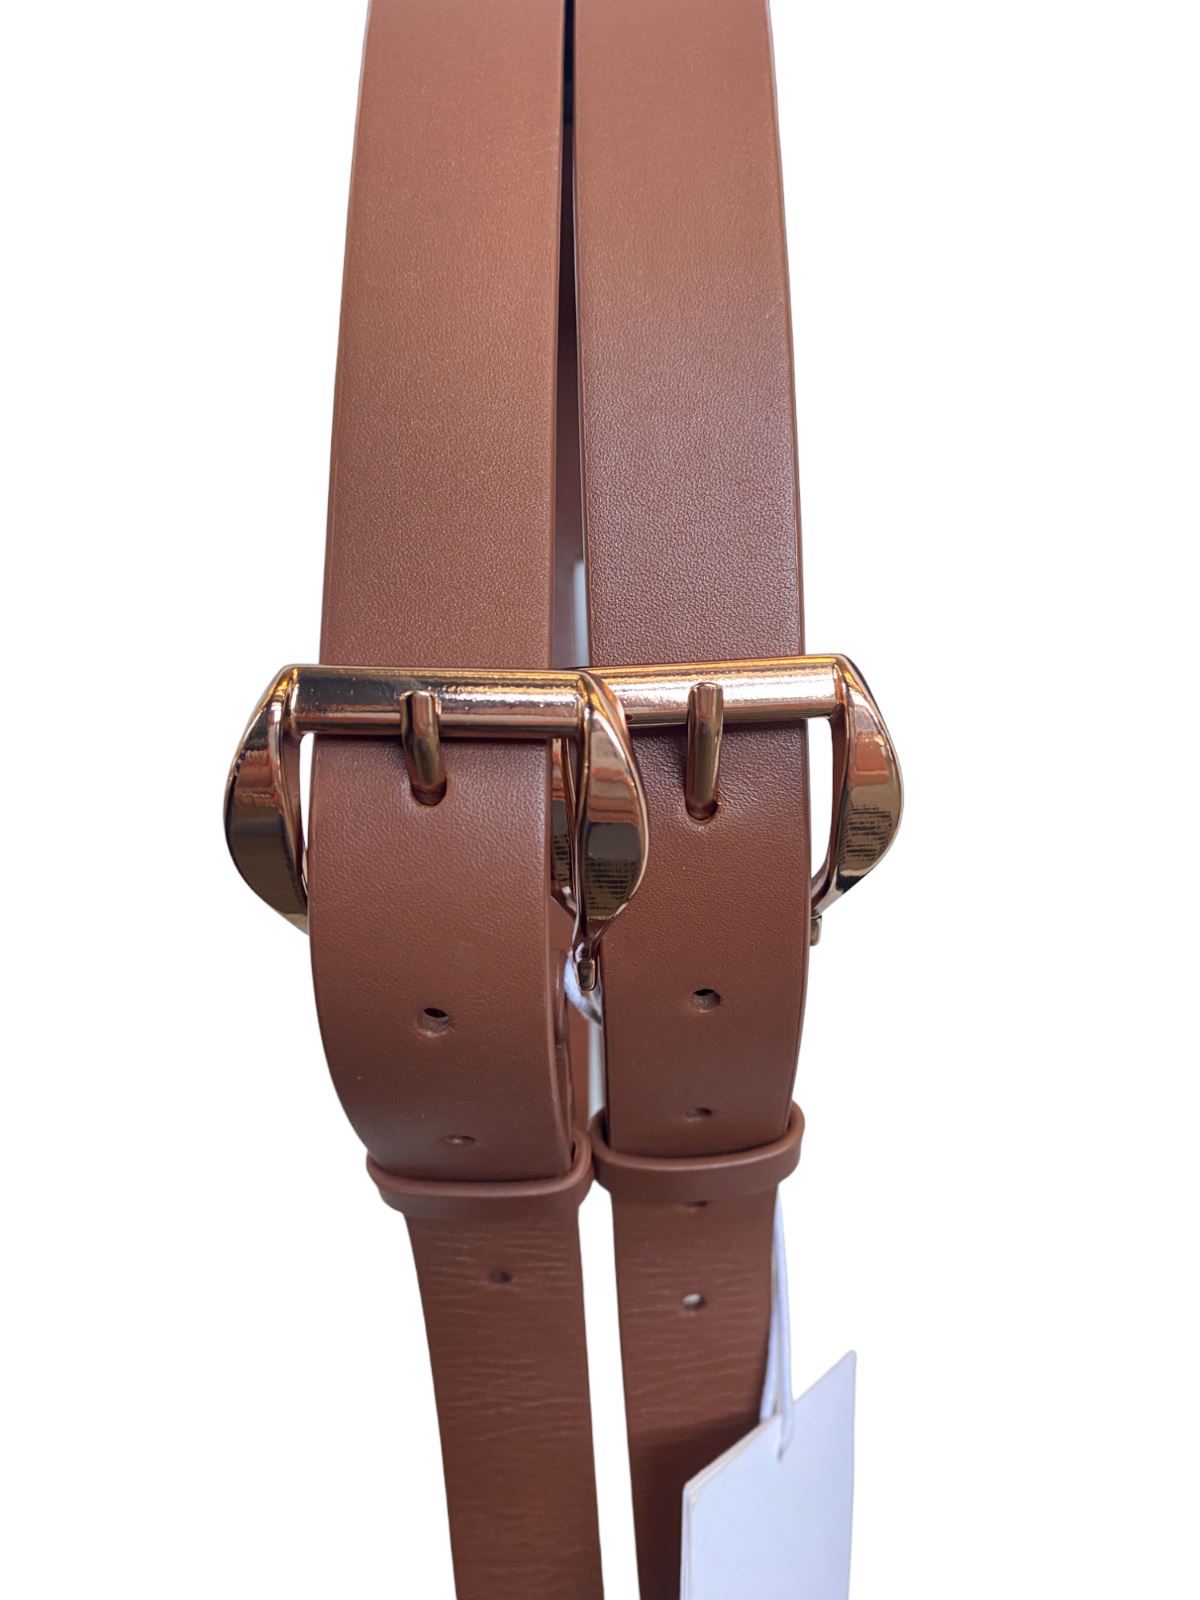 Zimmermann Double Buckled Wide Belt | Tan/Brown, Leather, Waist, Gold Buckles